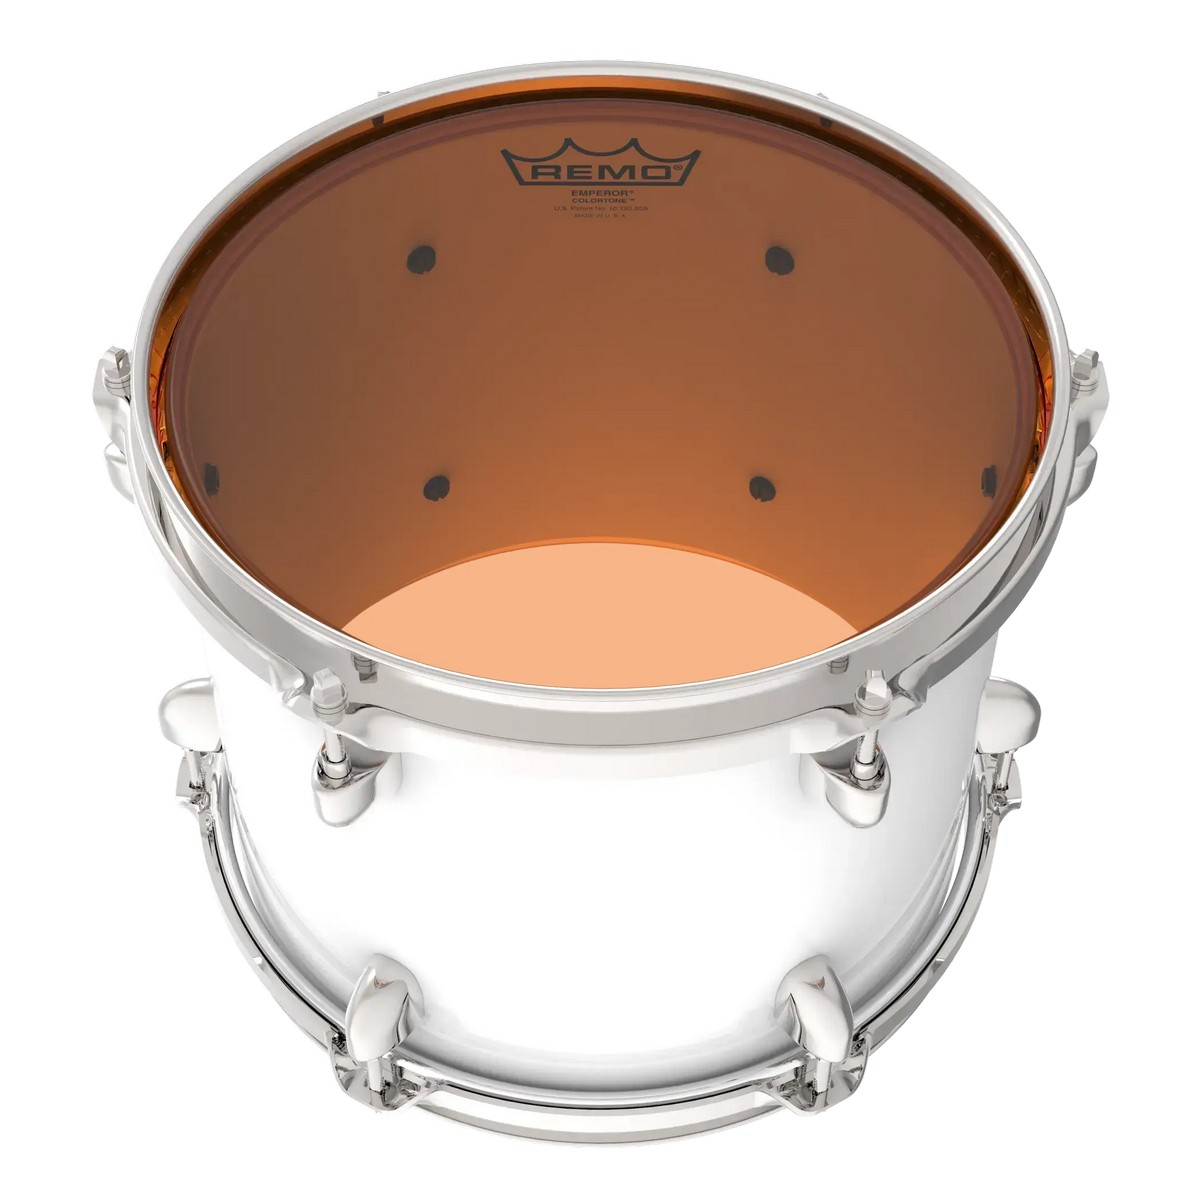 Пластик для барабана REMO BE-0314-CT-OG Colortone Emperor Clear Orange